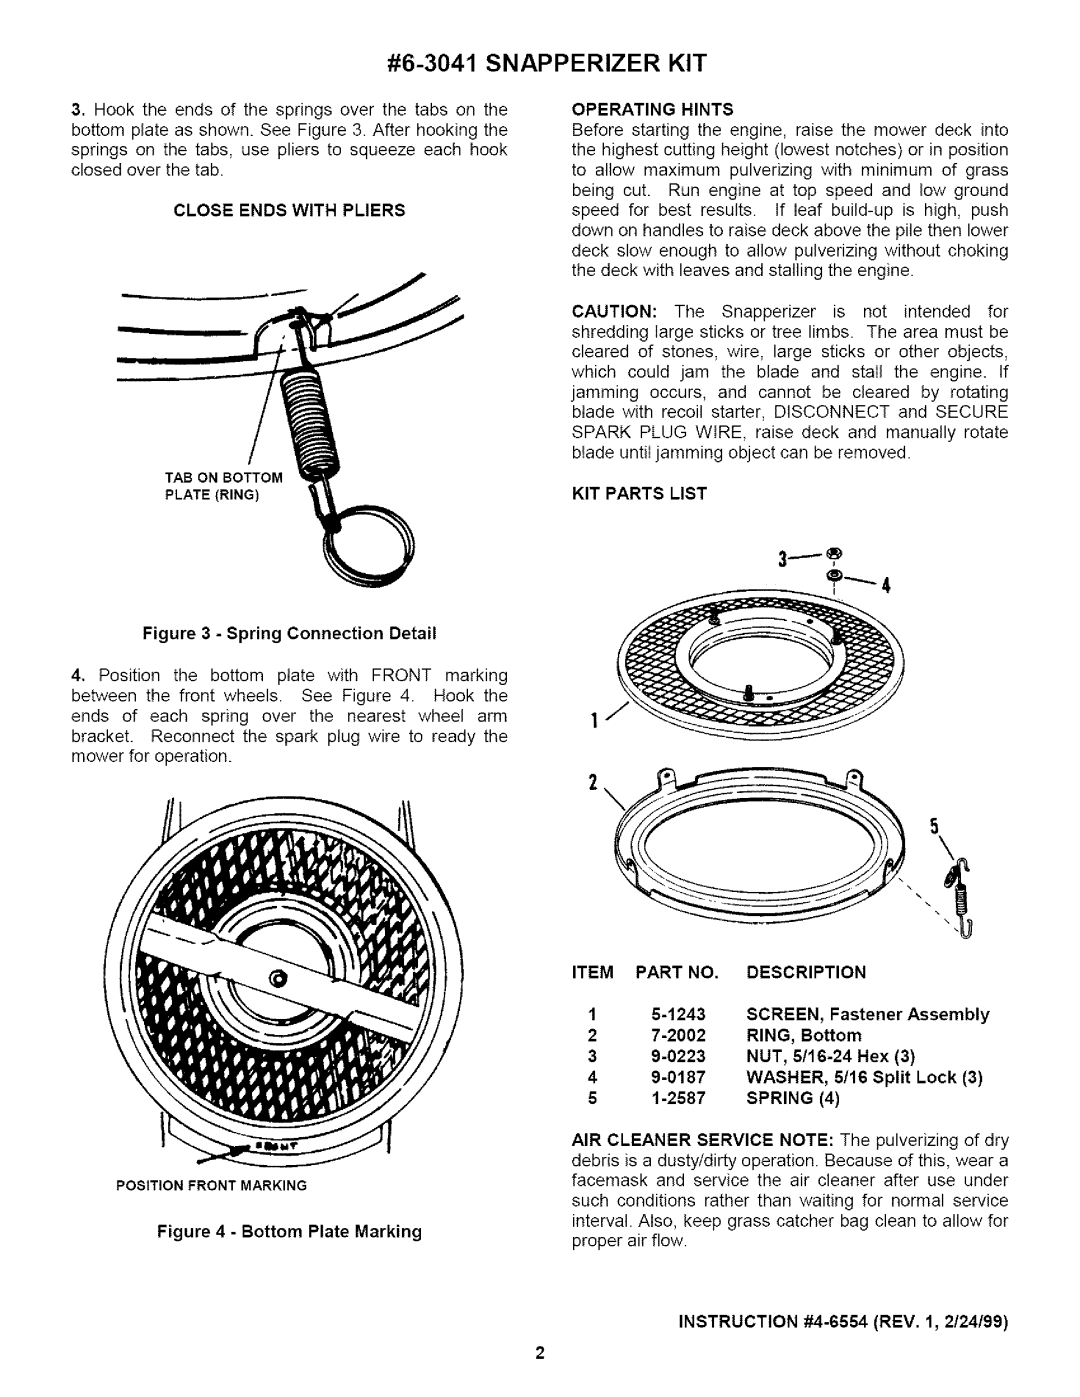 Sears manual #6-3041SNAPPERIZER KIT, Bottom Plate Marking 